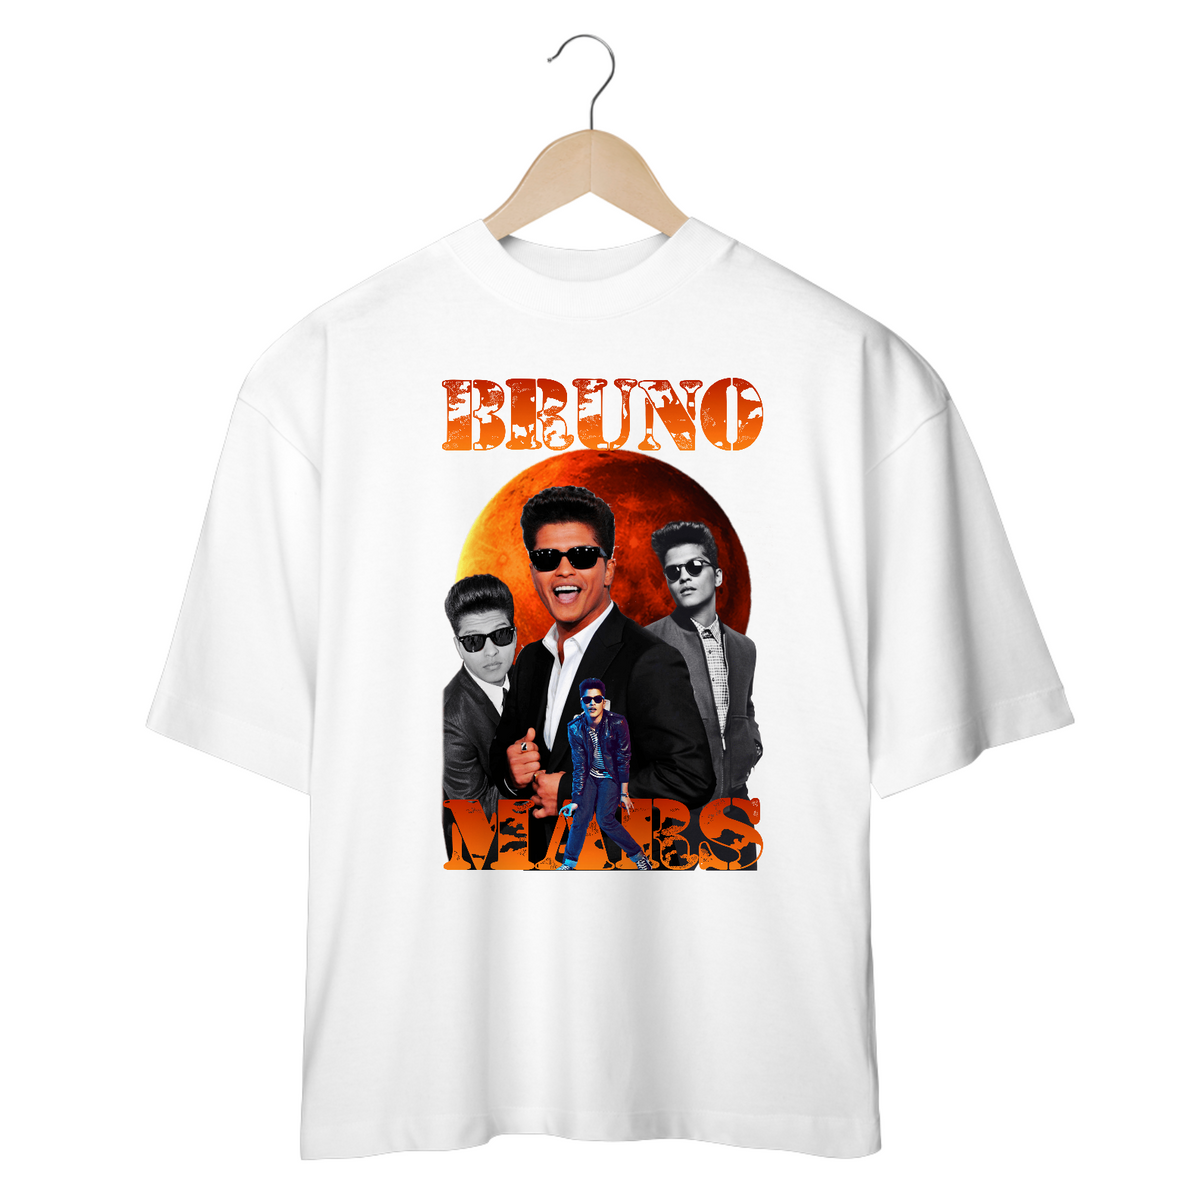 Nome do produto: Camiseta Oversized - Bruno Mars 